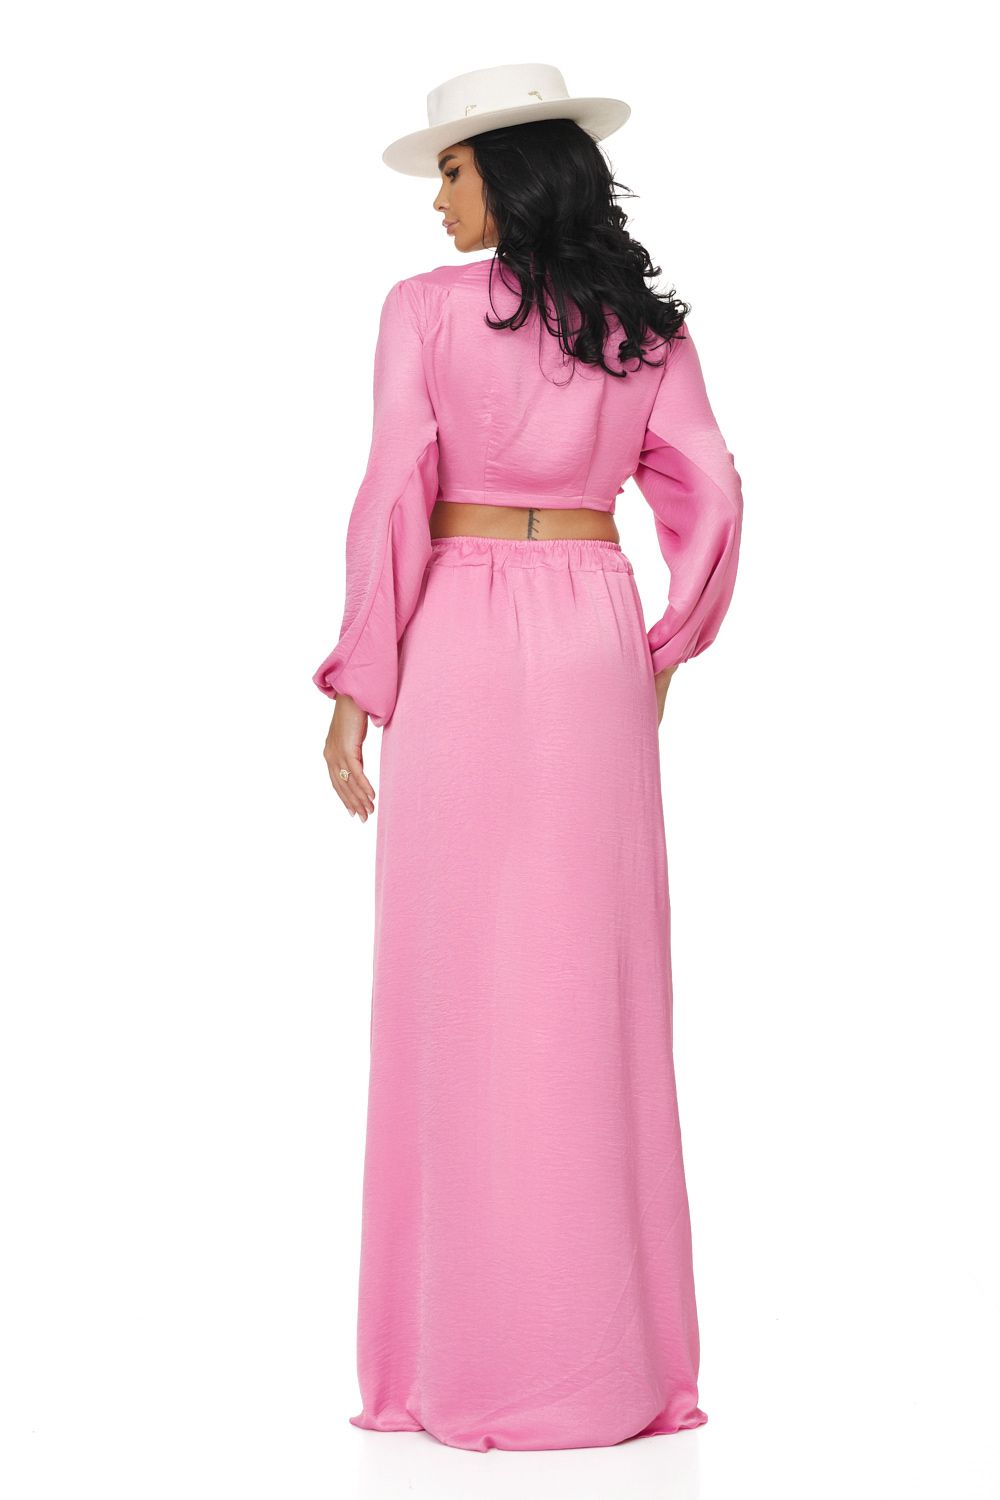 Poline Bogas' casual pink suit